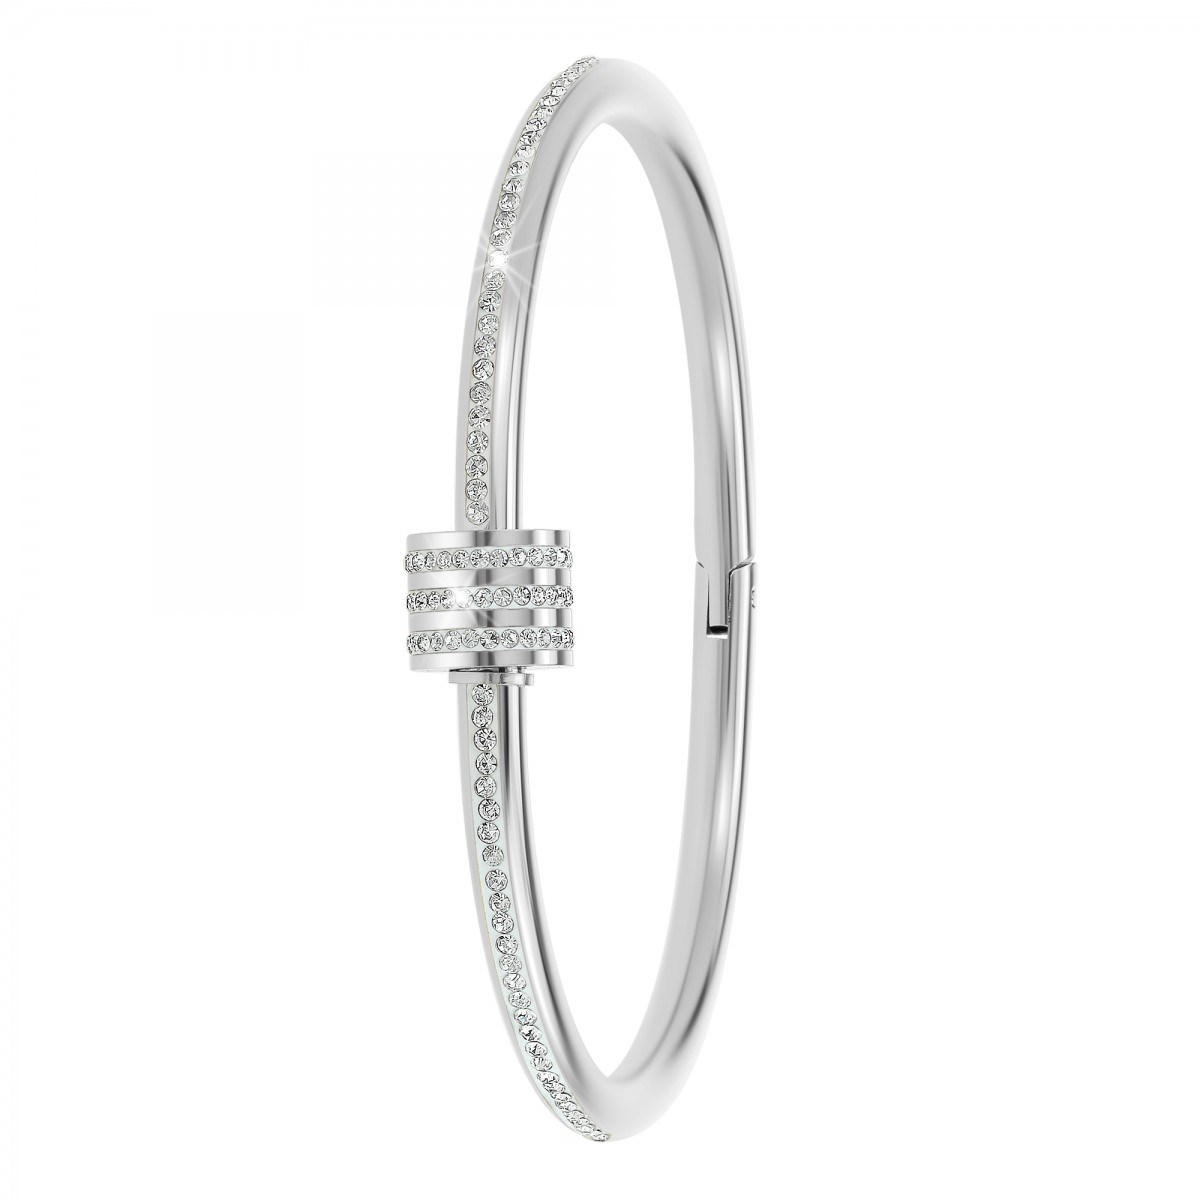 Bracelet SC Crystal orné de Cristaux scintillants